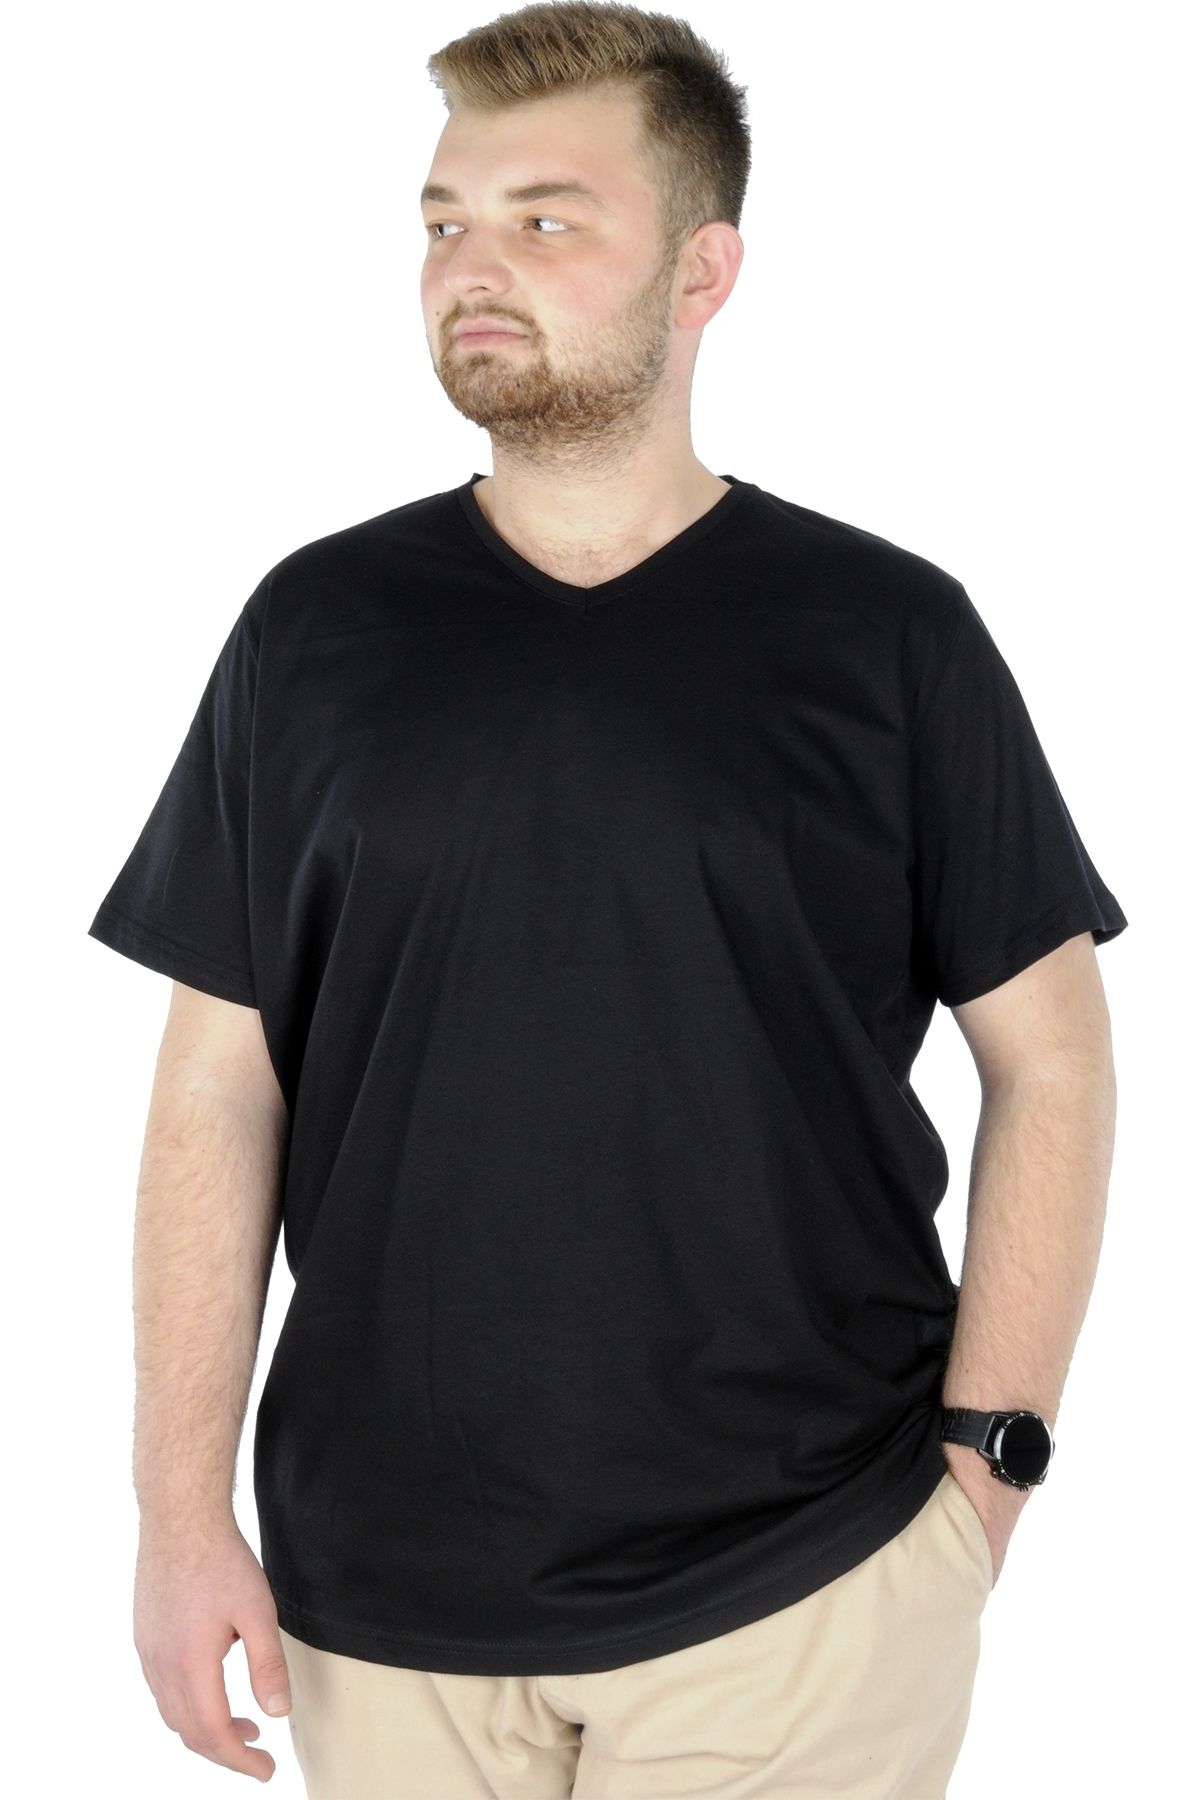 Modexl Mode Xl Büyük Beden Erkek Tshirt V Yaka 20032 Siyah